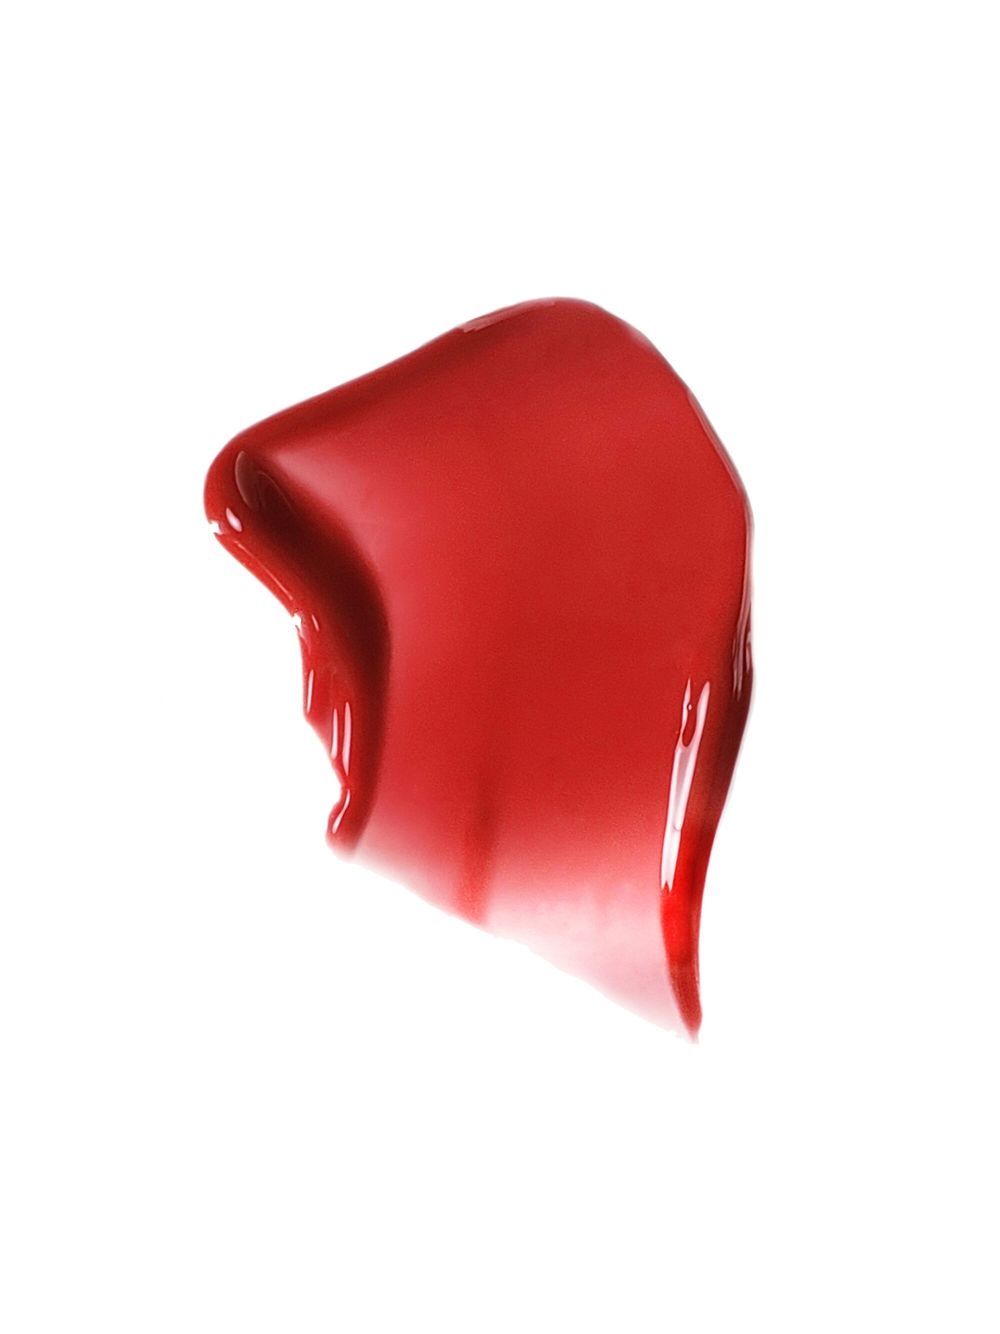 Westman Atelier Squeaky Clean vloeibare lippenbalsem - Rood